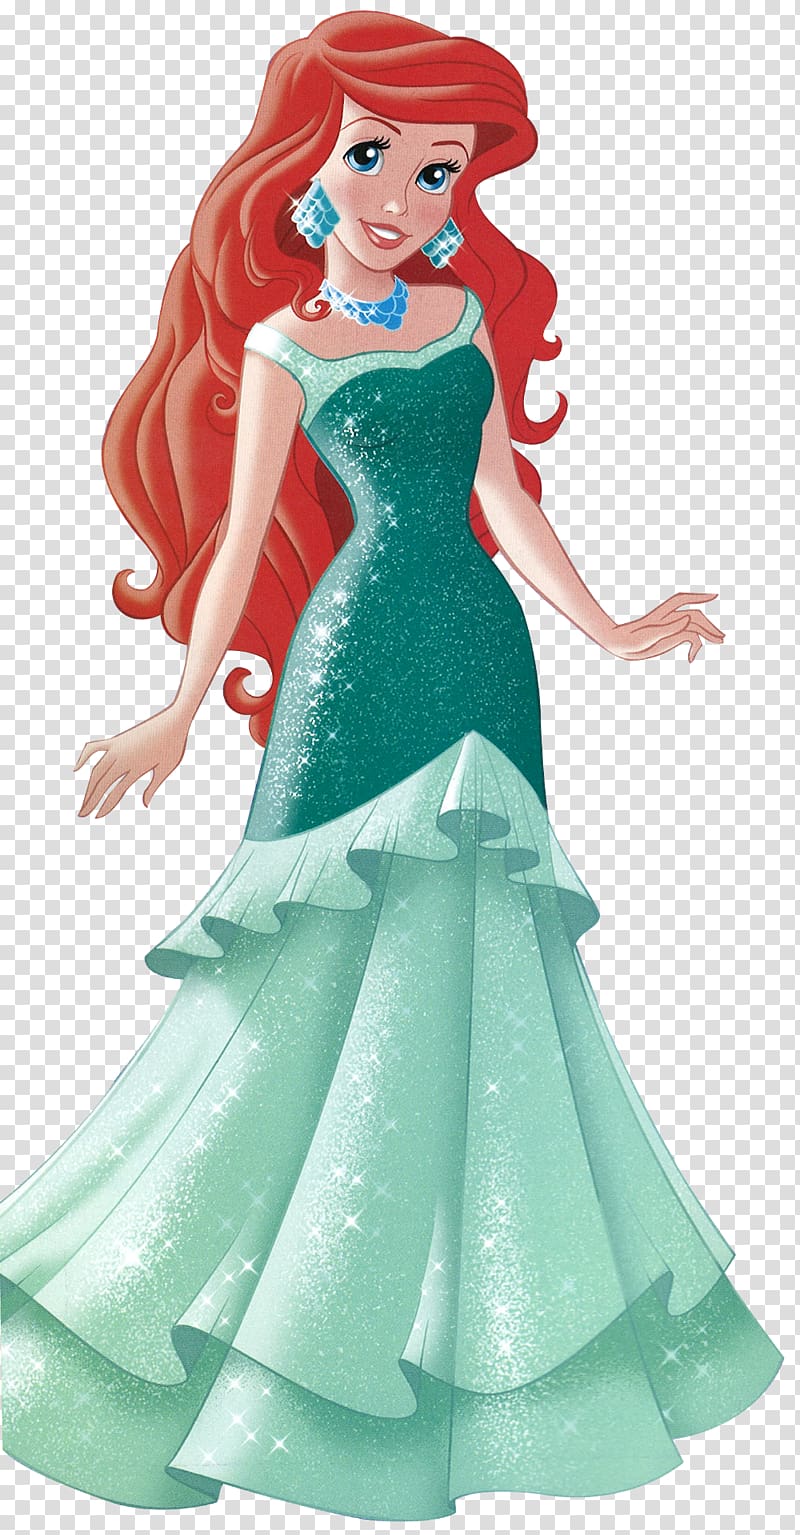 Ariel Rapunzel The Prince The Little Mermaid Queen Athena, Disney Princess transparent background PNG clipart